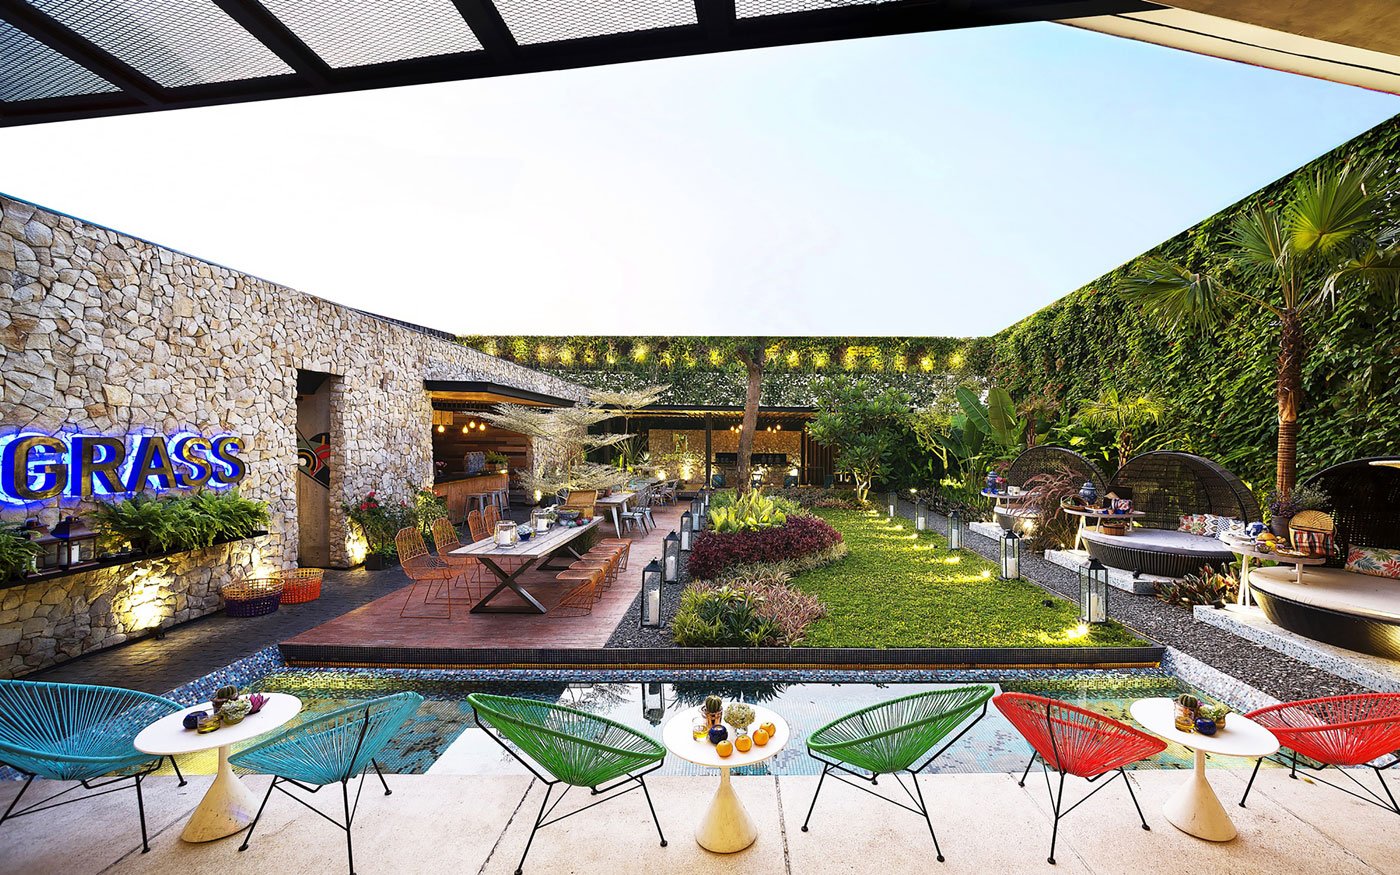 Stylish Tropical Paradise Theme of Lemongrass Restaurant Designed by Einstein & Associates-06